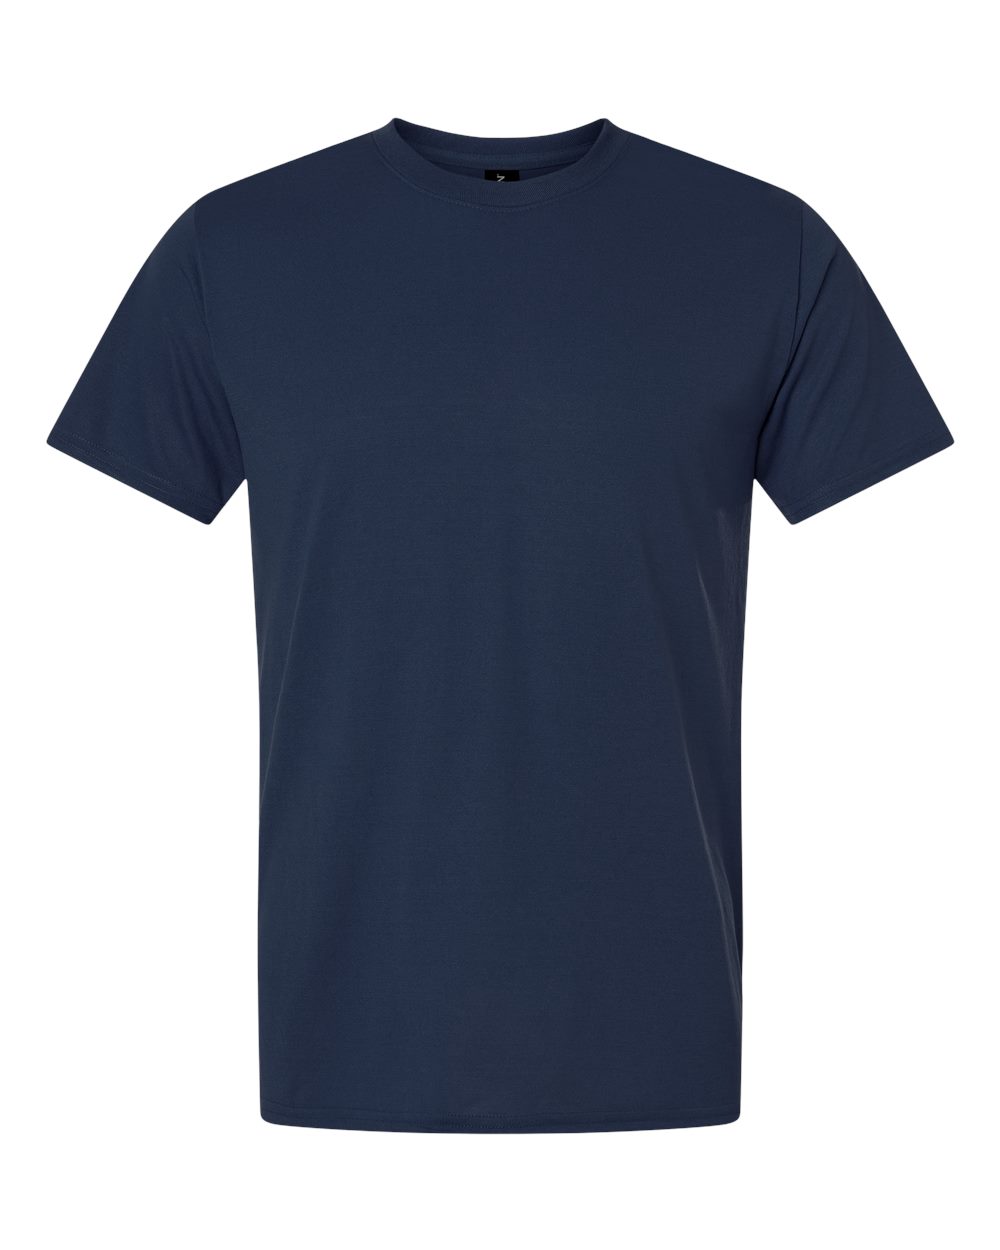 Gildan Mens Blank Performance Short Sleeve T Shirt 42000 up to 3XL | eBay